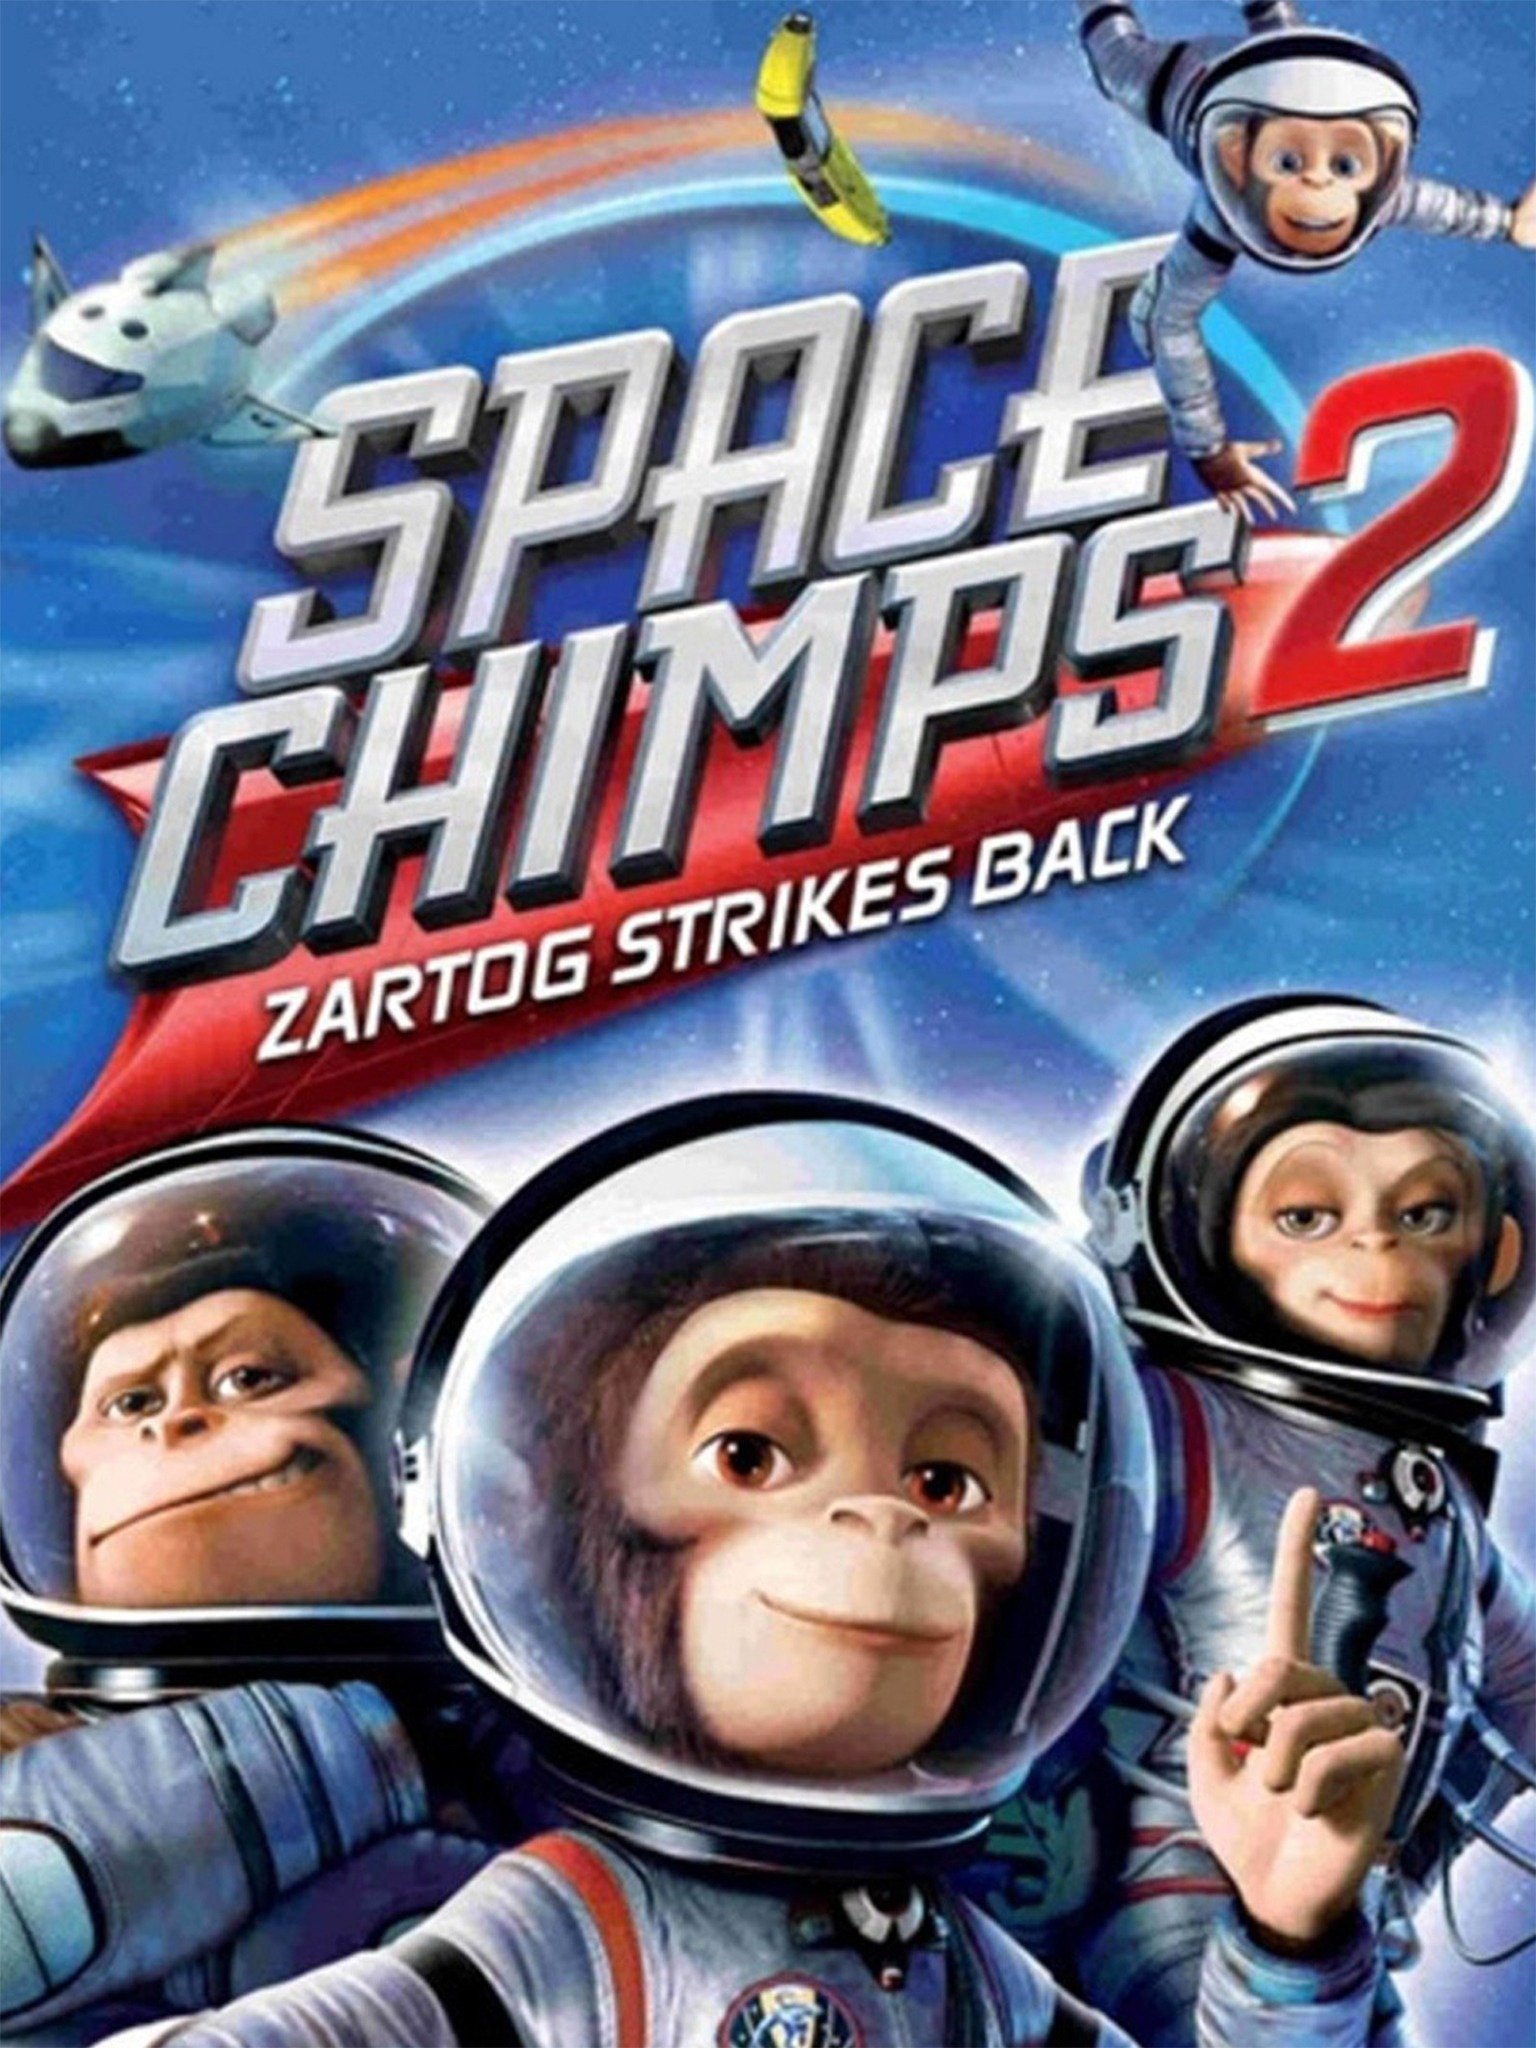 amazon space chimps dvd